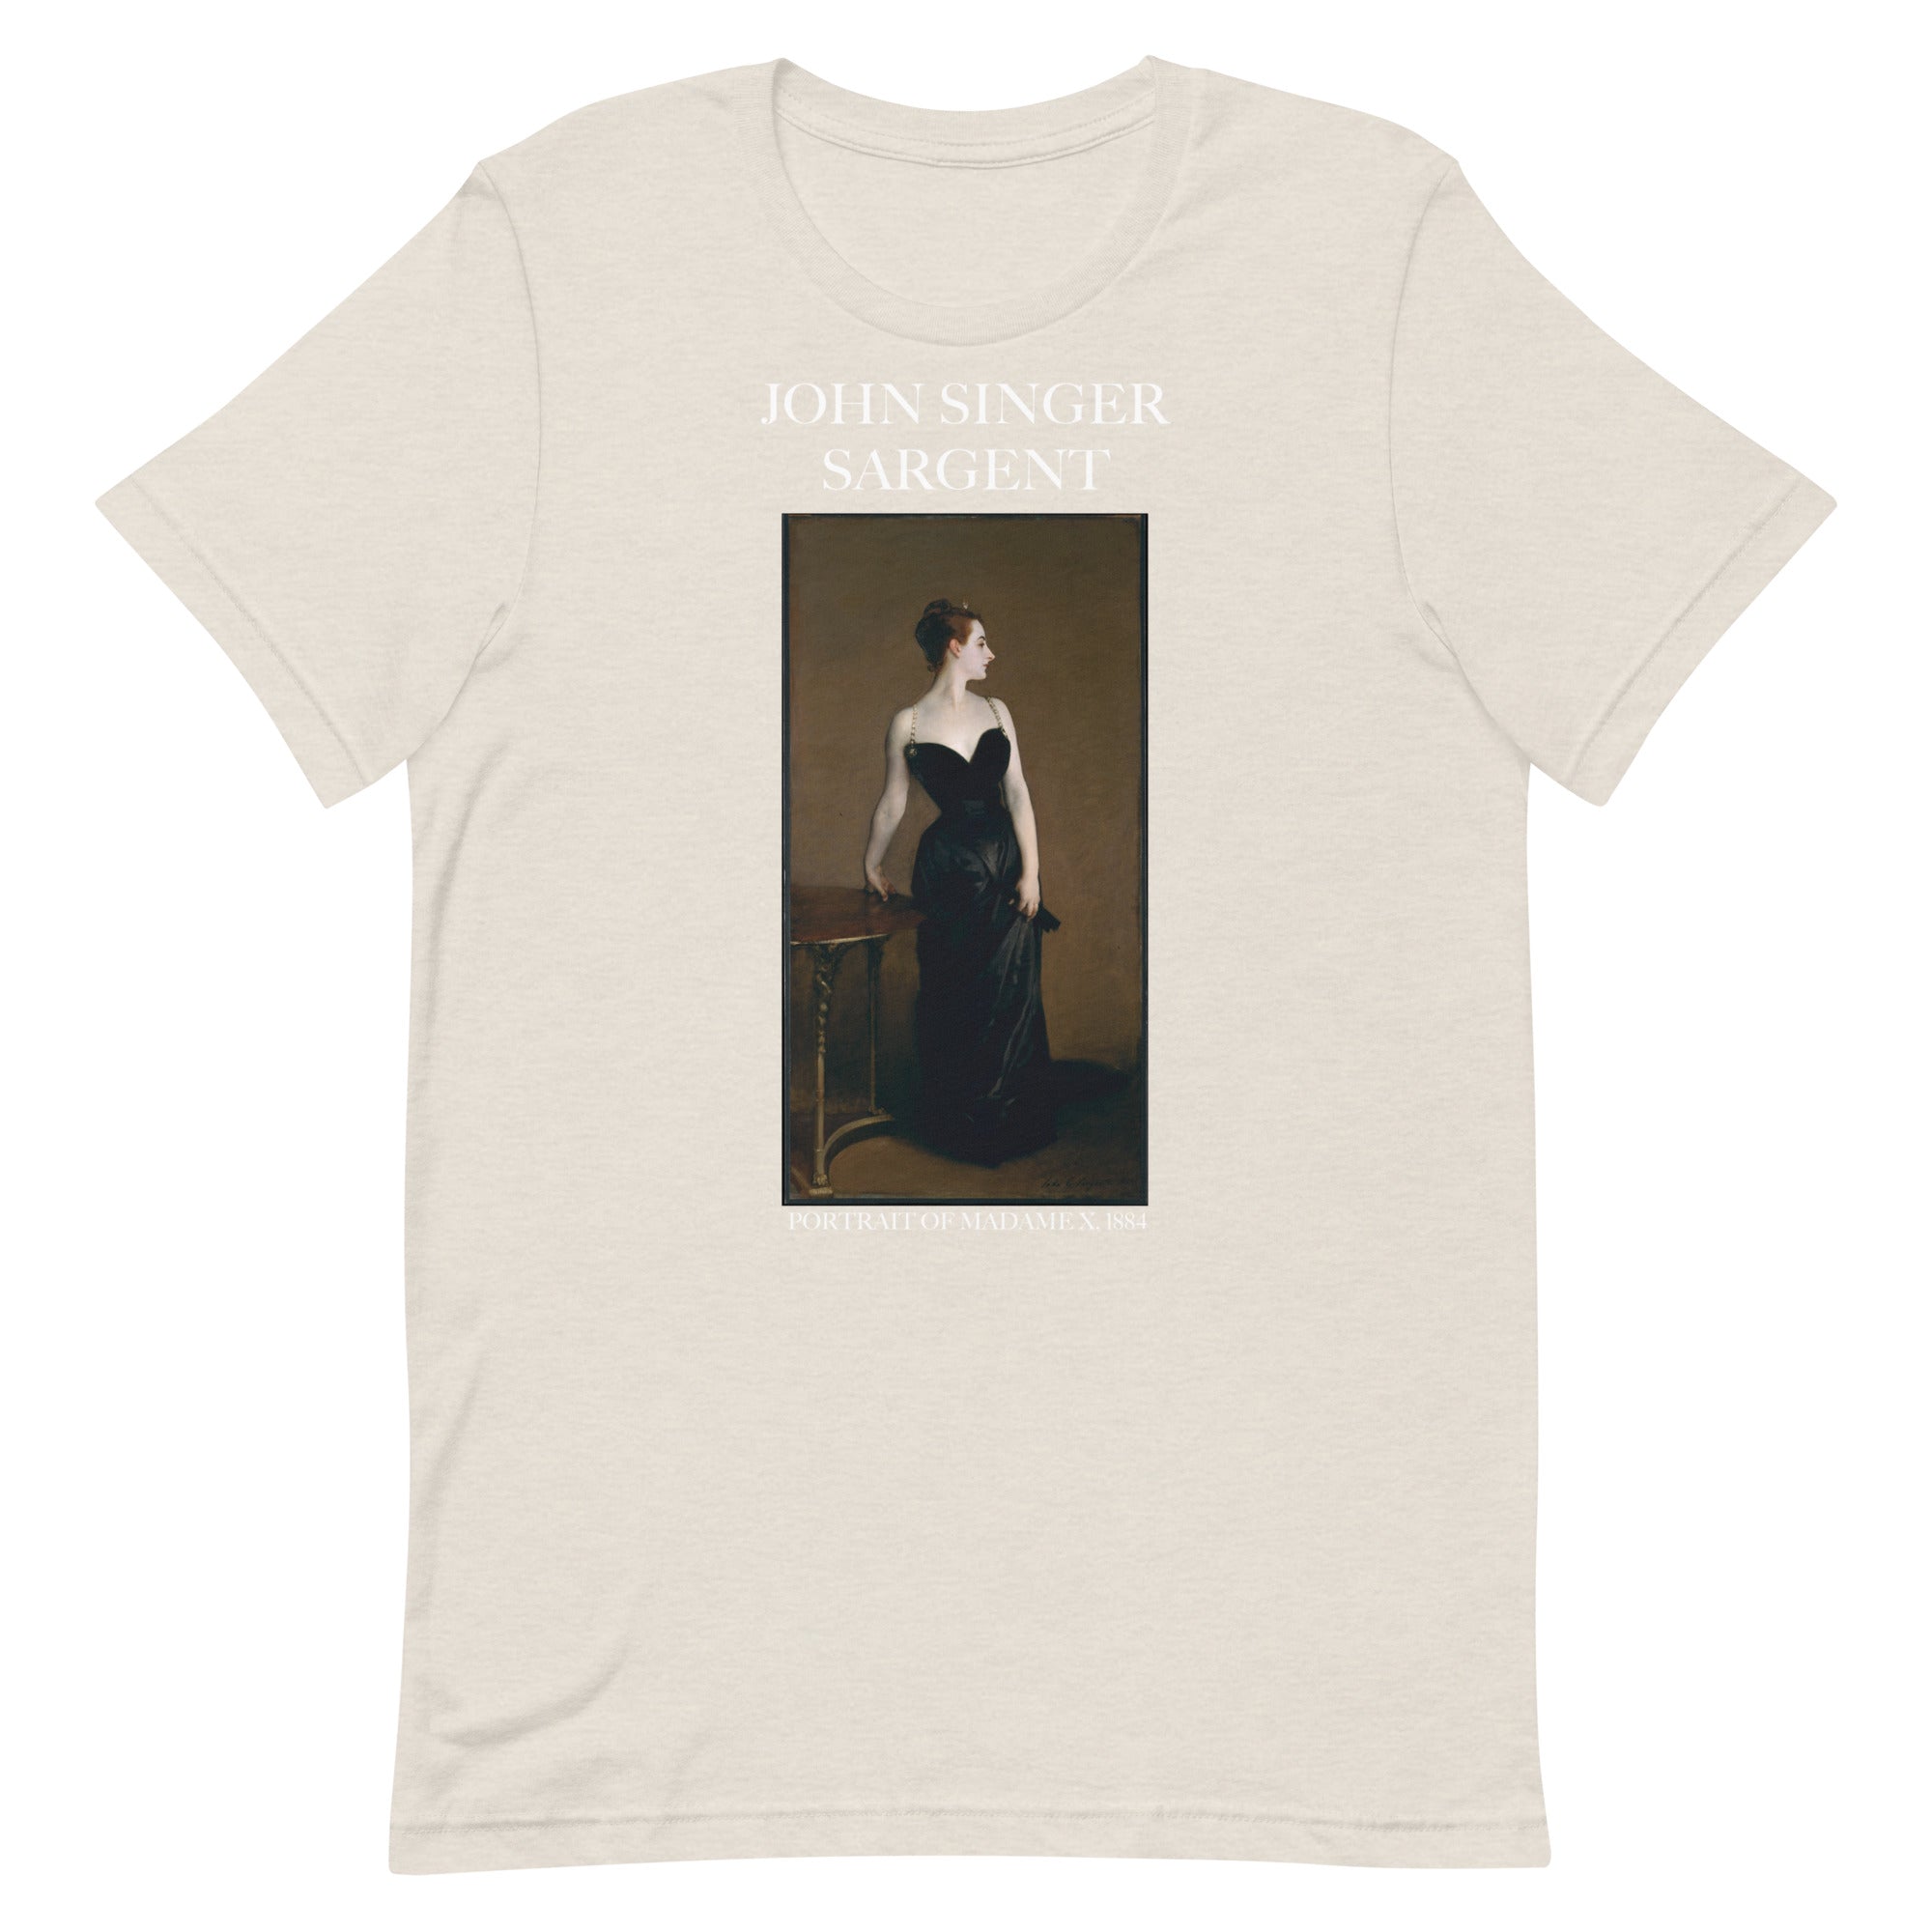 John Singer Sargent 'Portrait of Madame X' Famous Painting T-Shirt | Unisex Classic Art Tee